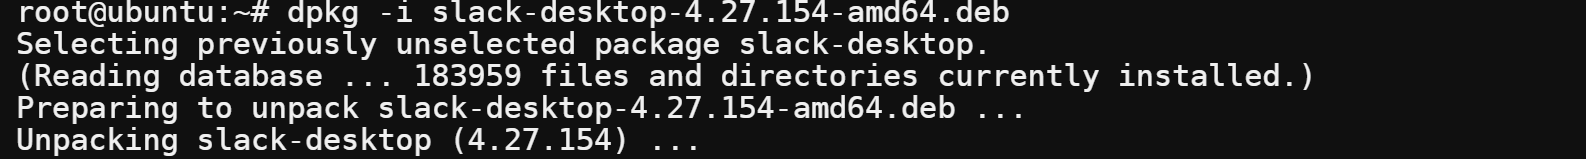 Installing Slack via the Deb package